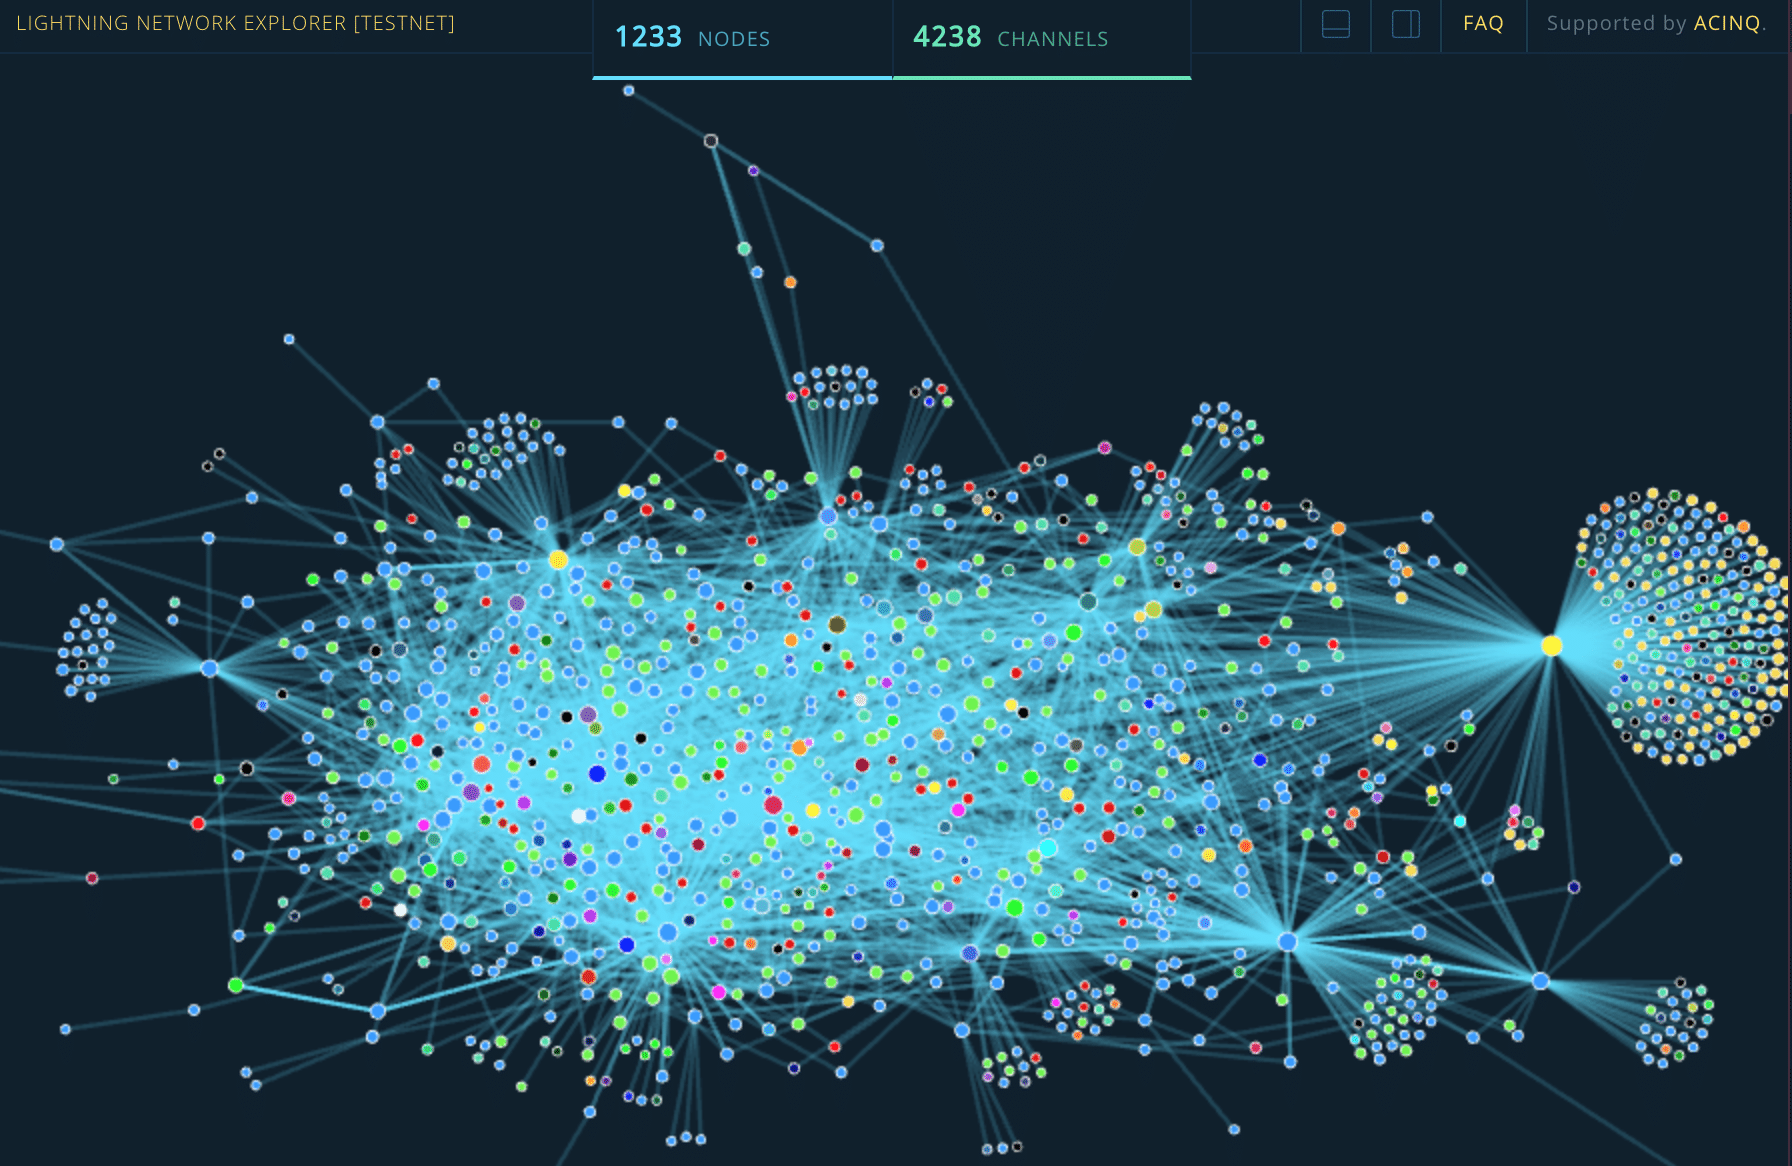   nodes of the lightning network 